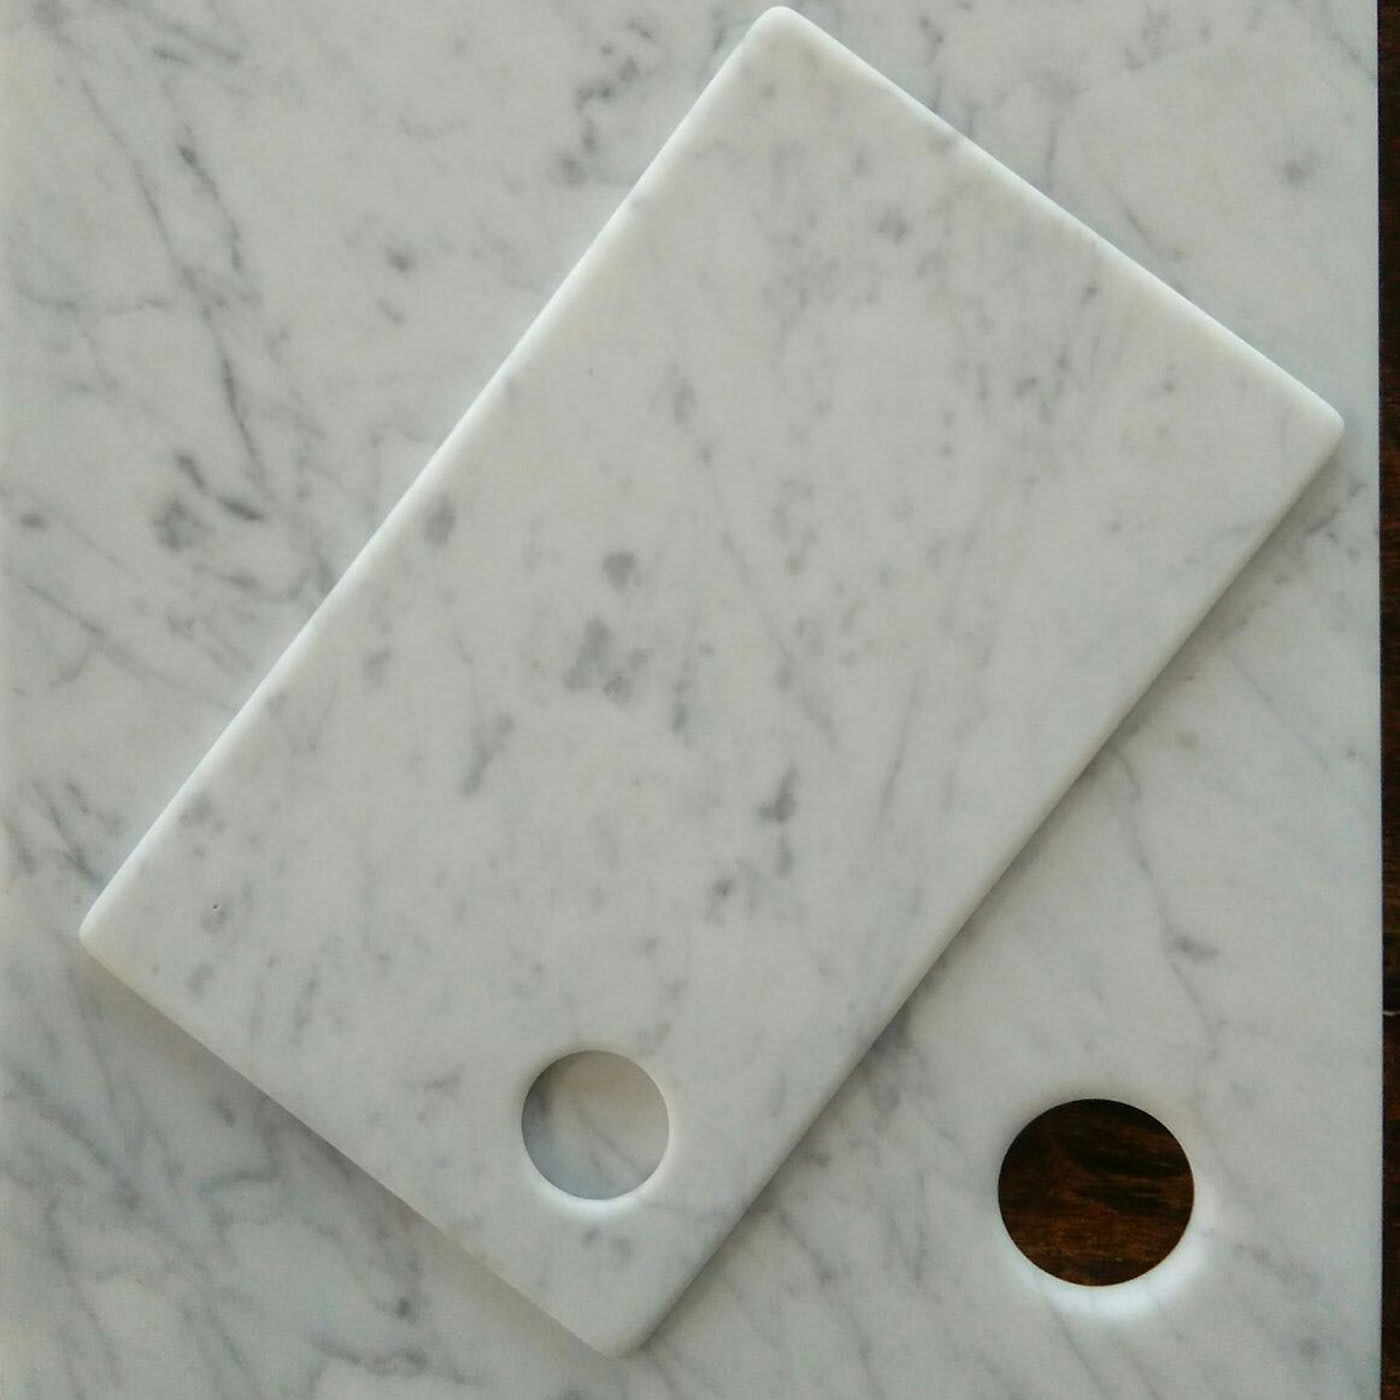 Convivio Maxi Trivet in Carrara Marble - Espidesign by Paola Speranza